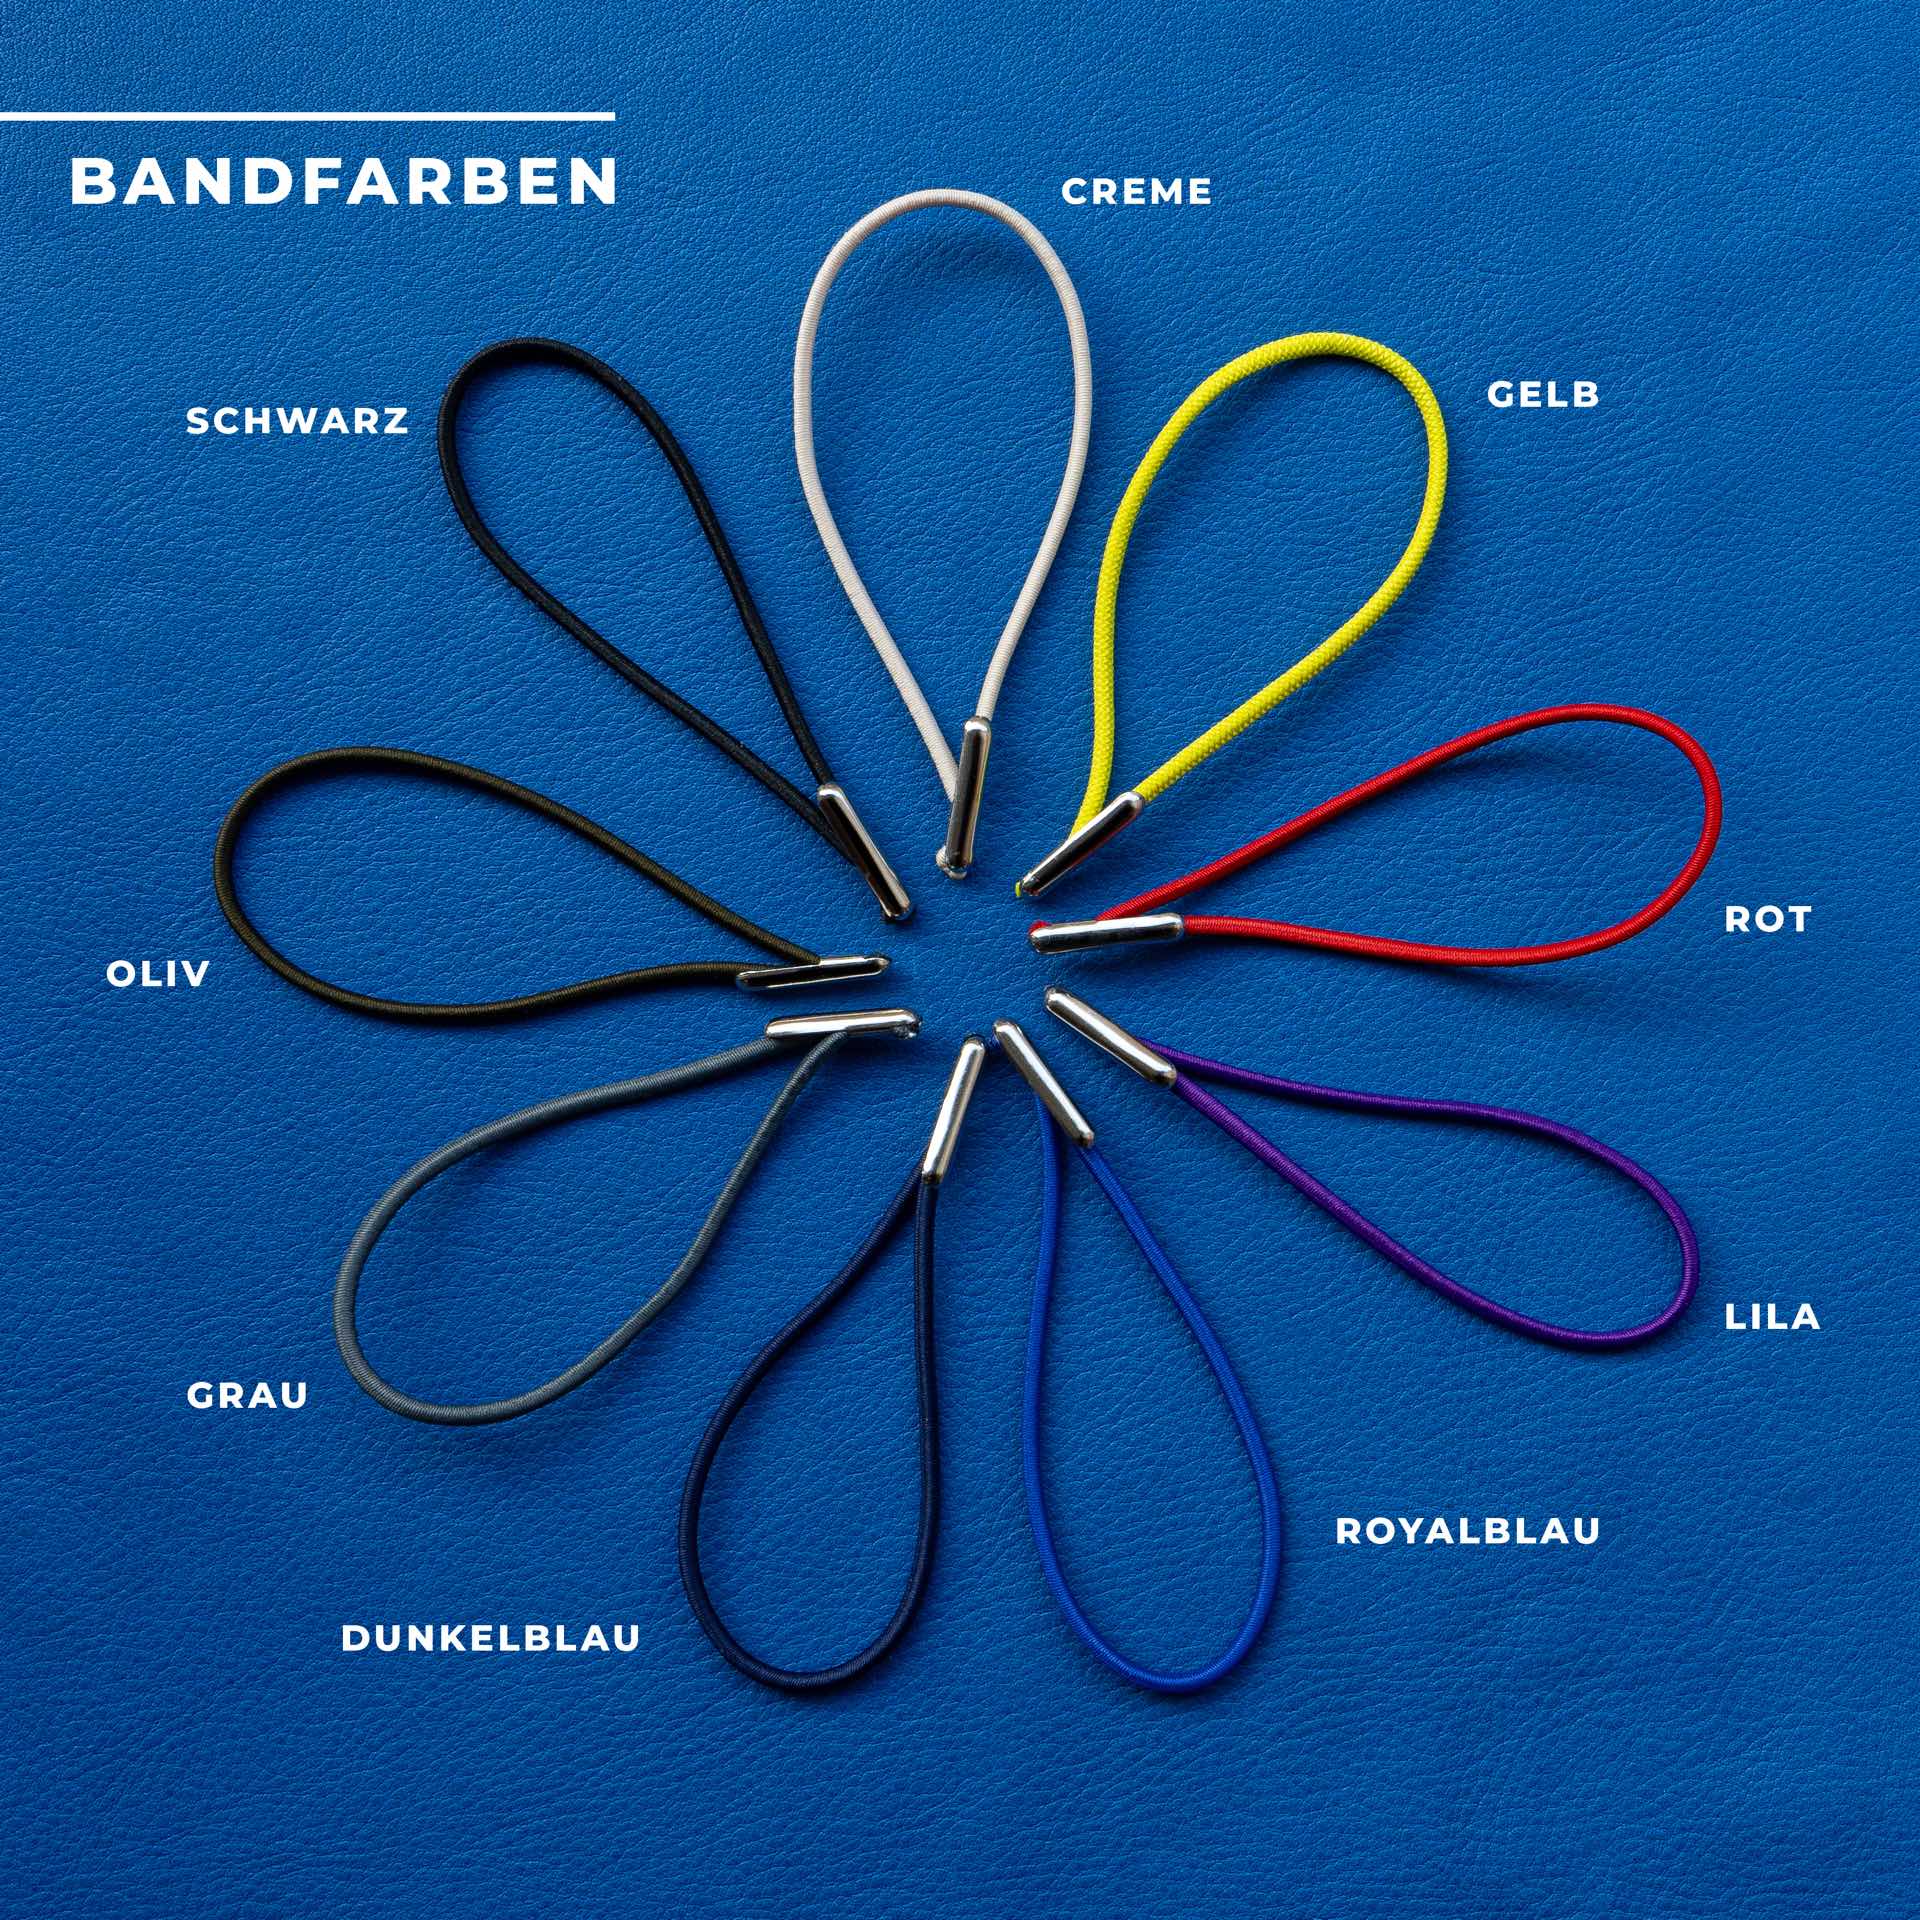 Bandfarben-Franziska-Klee-royalblau-bandfarben